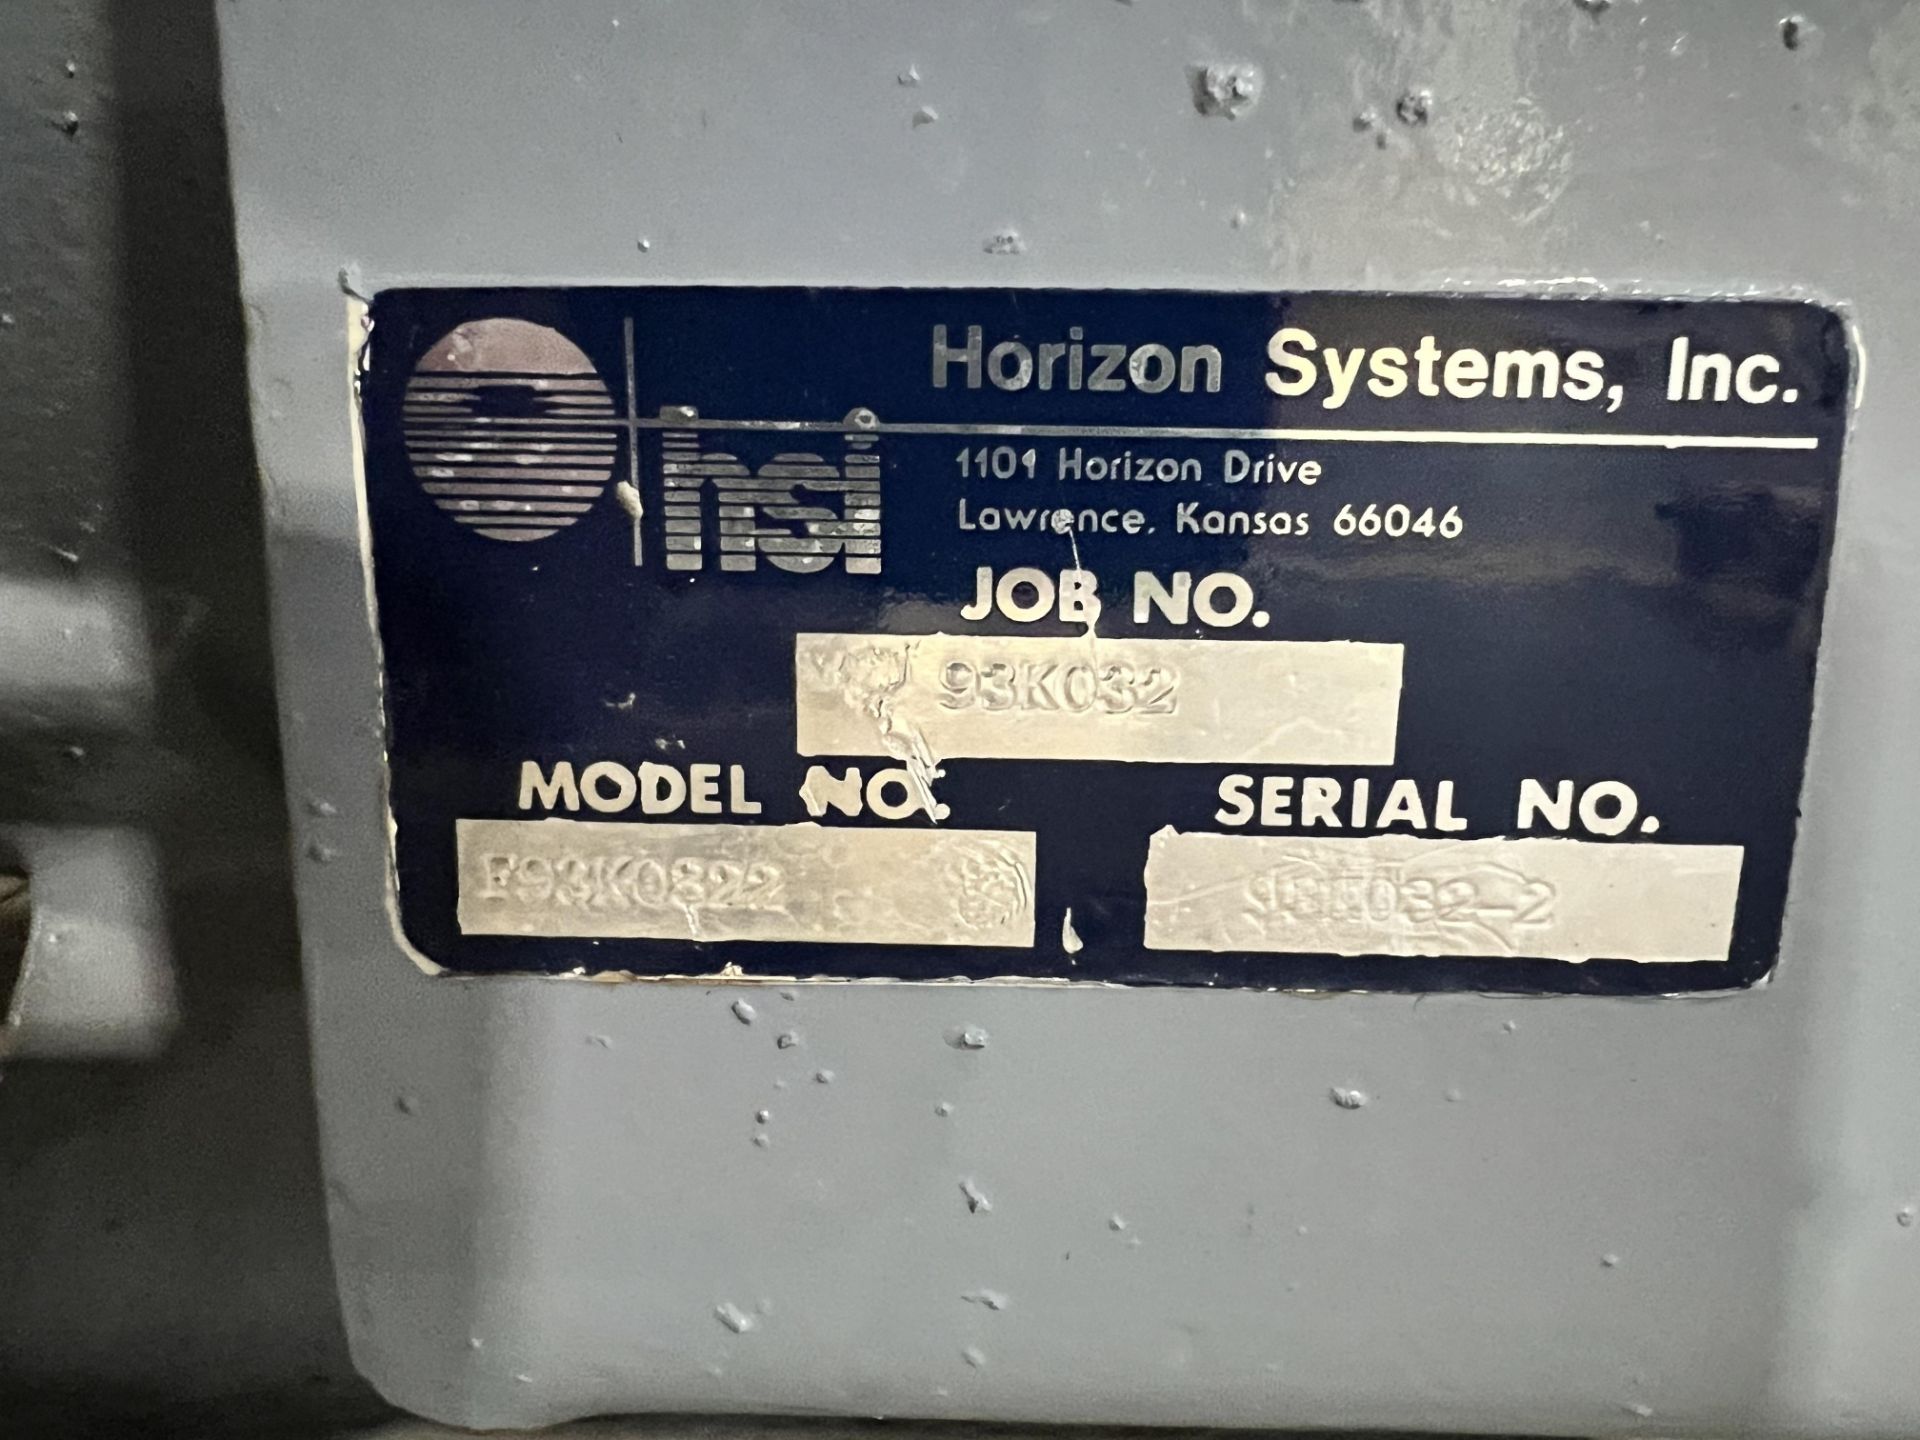 NEW HORIZON SYSTEMS INC ROTARY AIRLOCK VALVE, MODEL F93KO322 (SIMPLE LOADING FEE $110) - Image 10 of 17